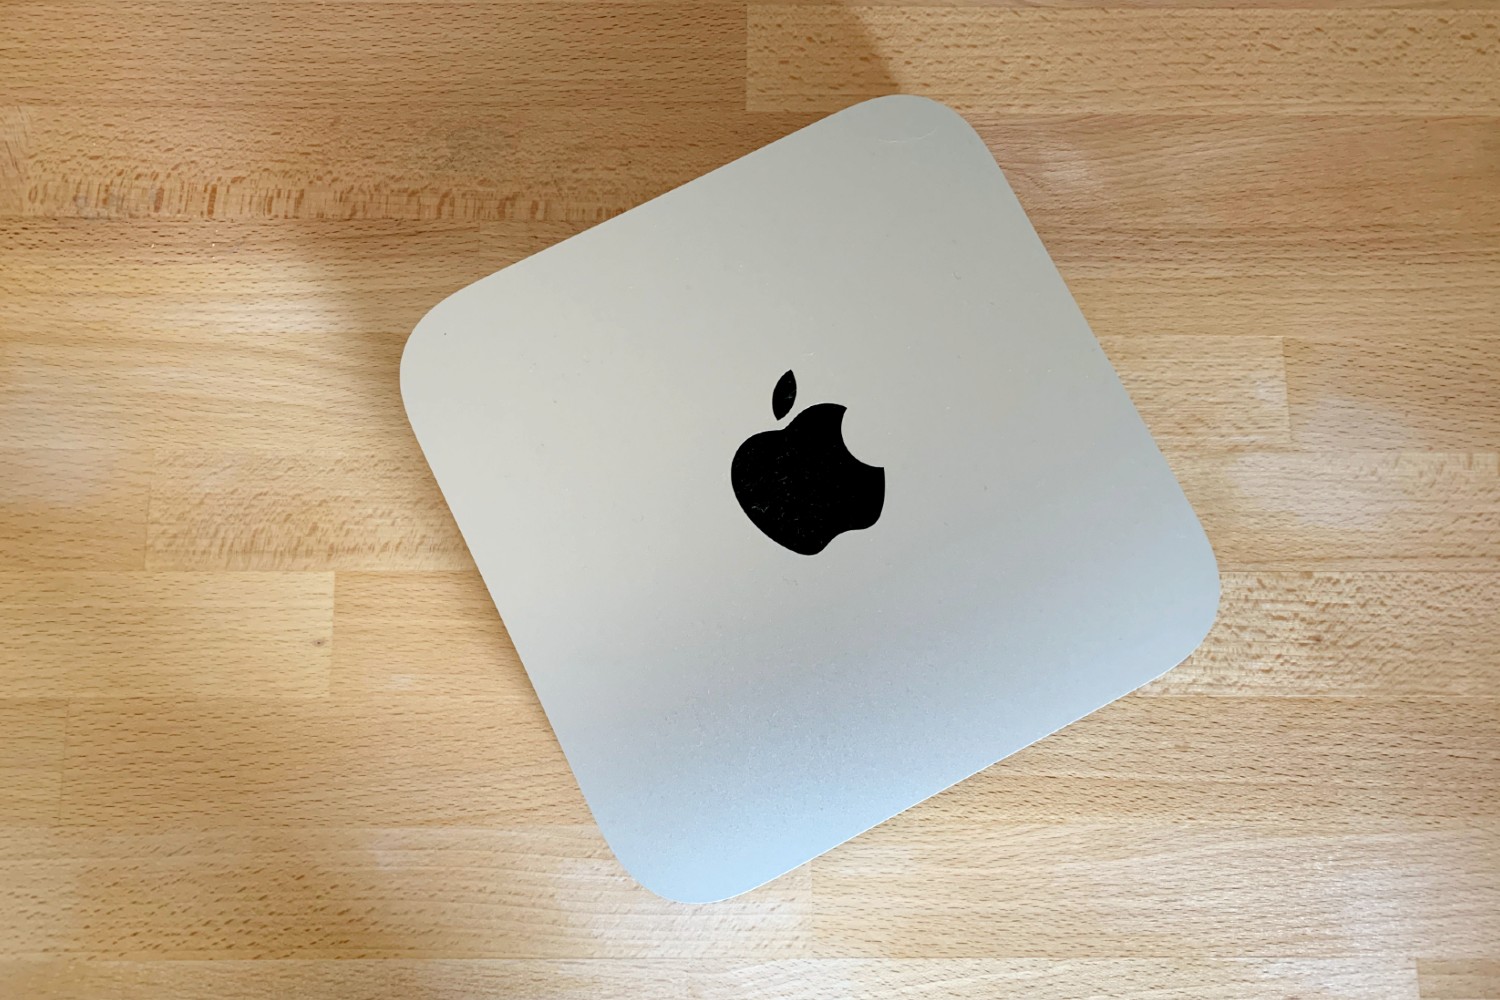 Apple May Be Testing an M3 Mac Mini, Based on Developer Logs - MacRumors